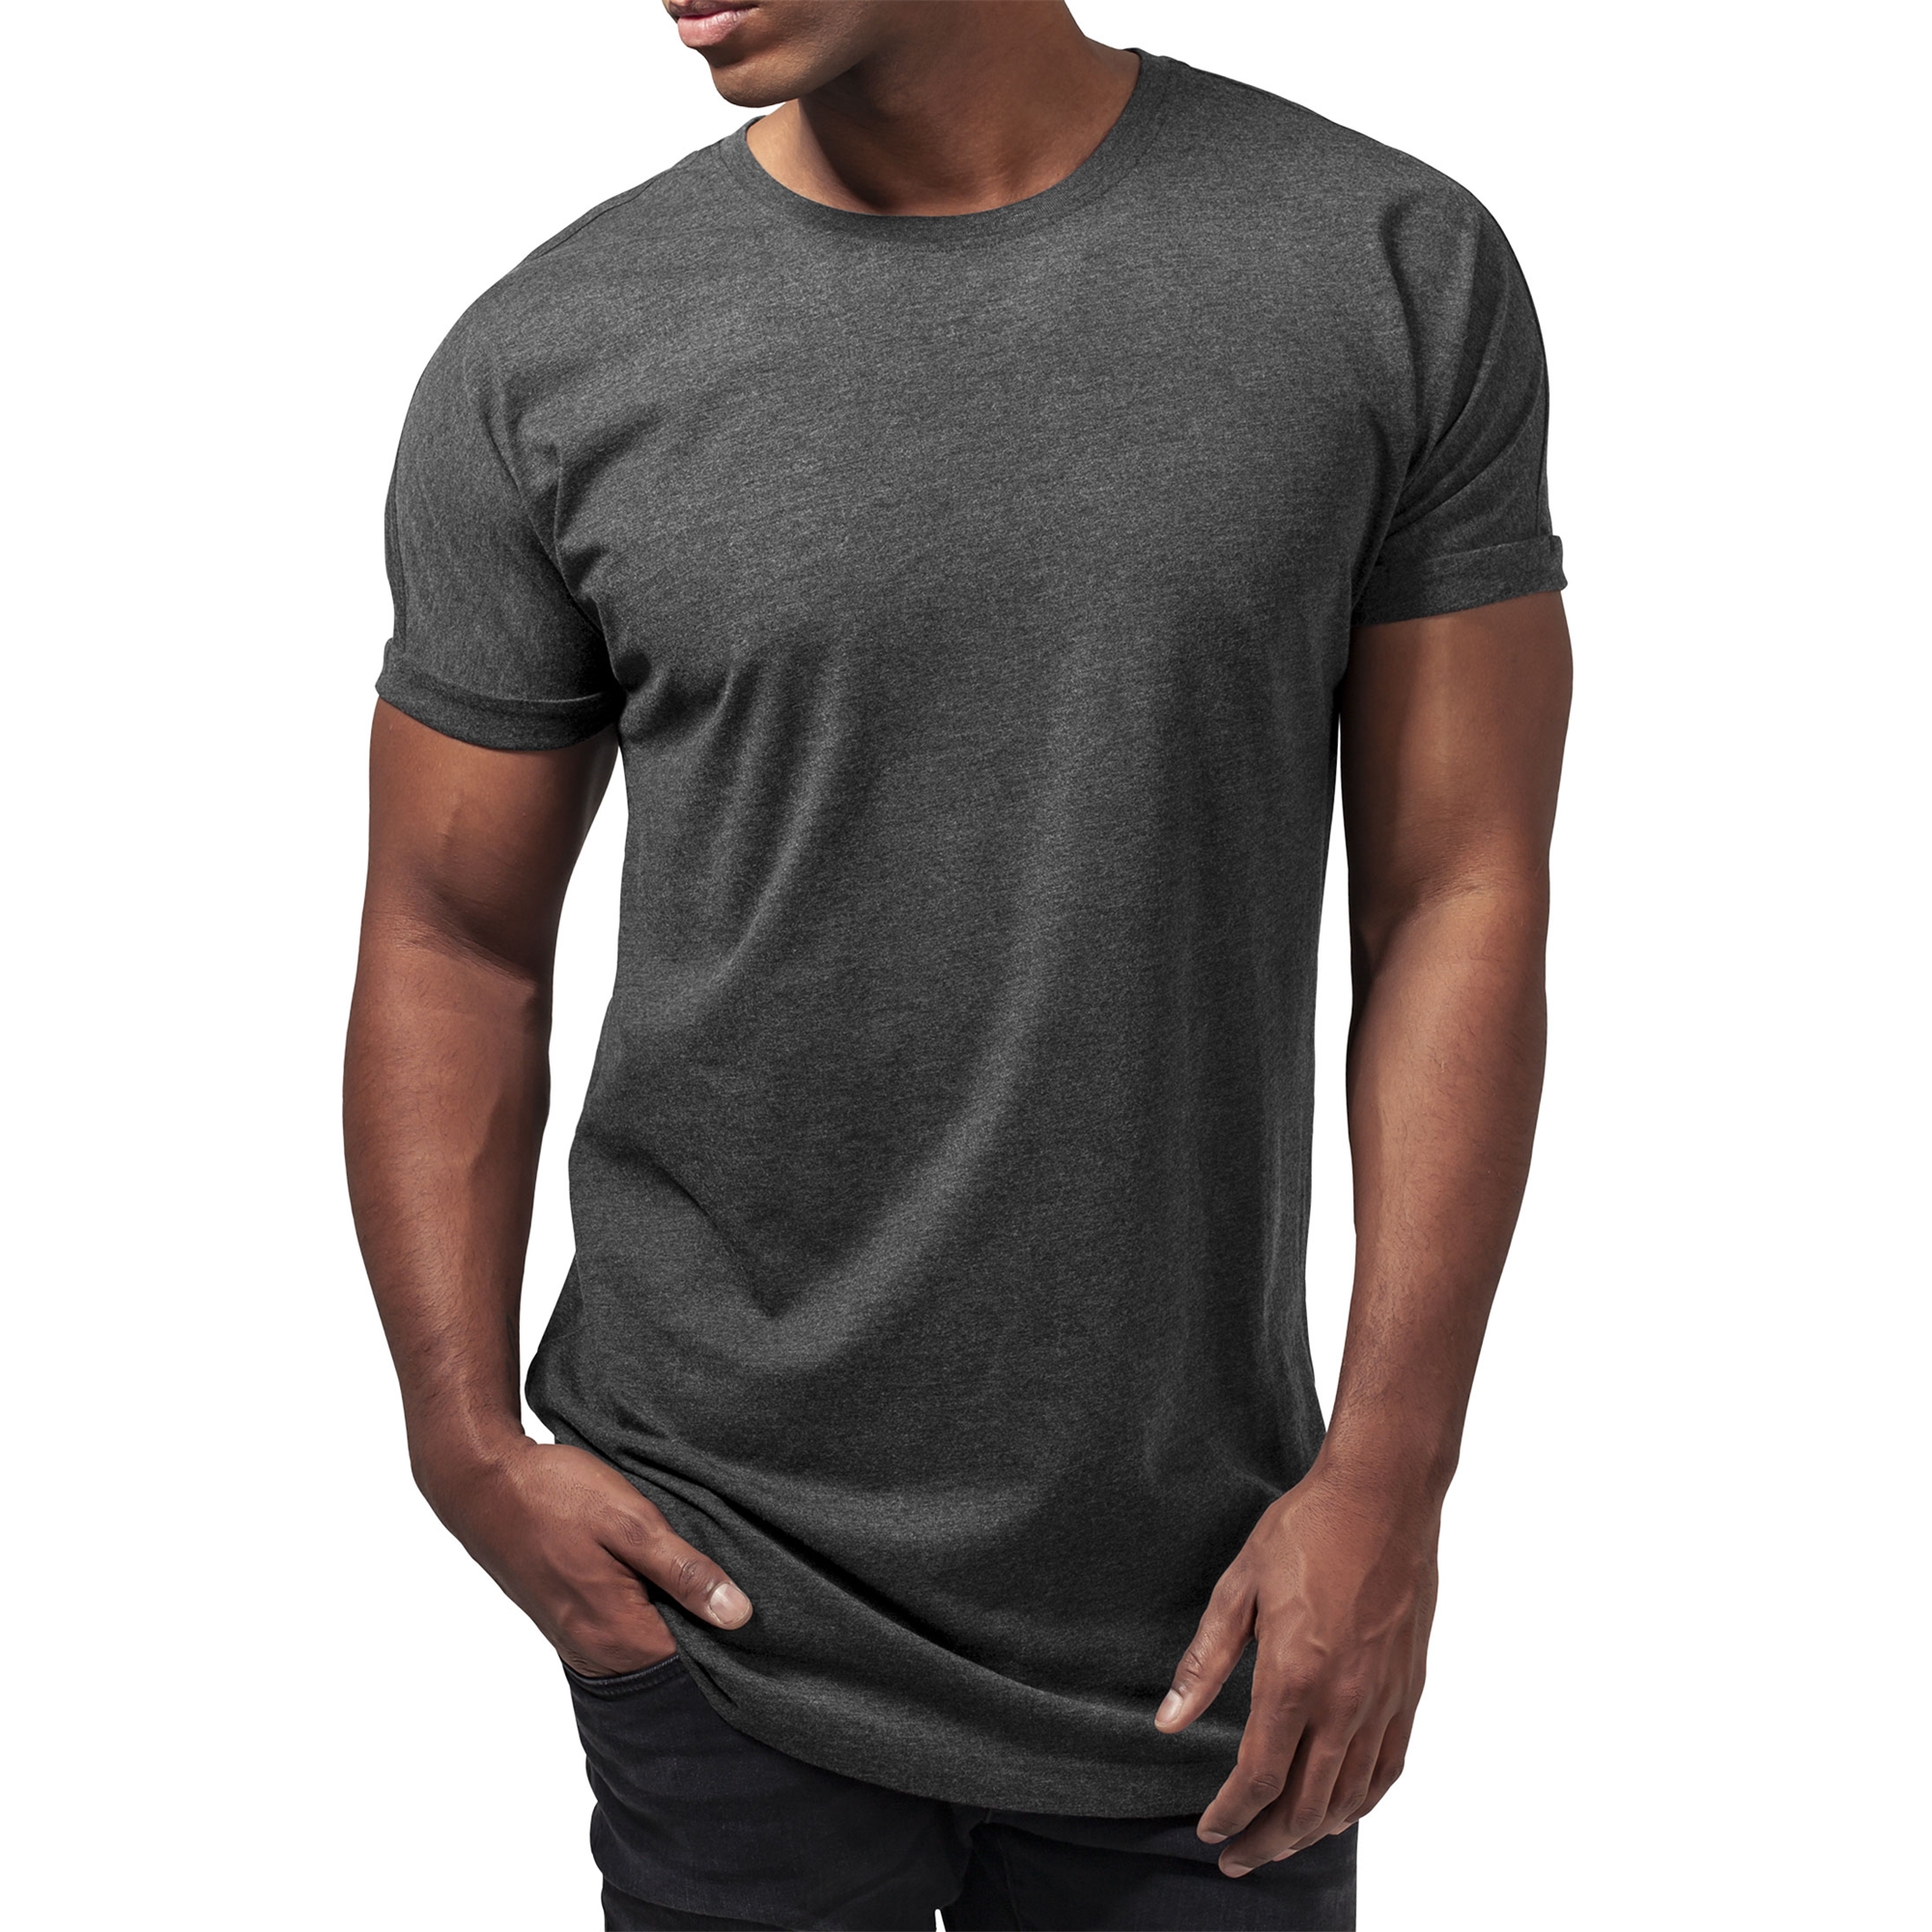 Urban Shirt extra | Tee oversize eBay Herren Long T-Shirt Classics lang Shaped Turnup